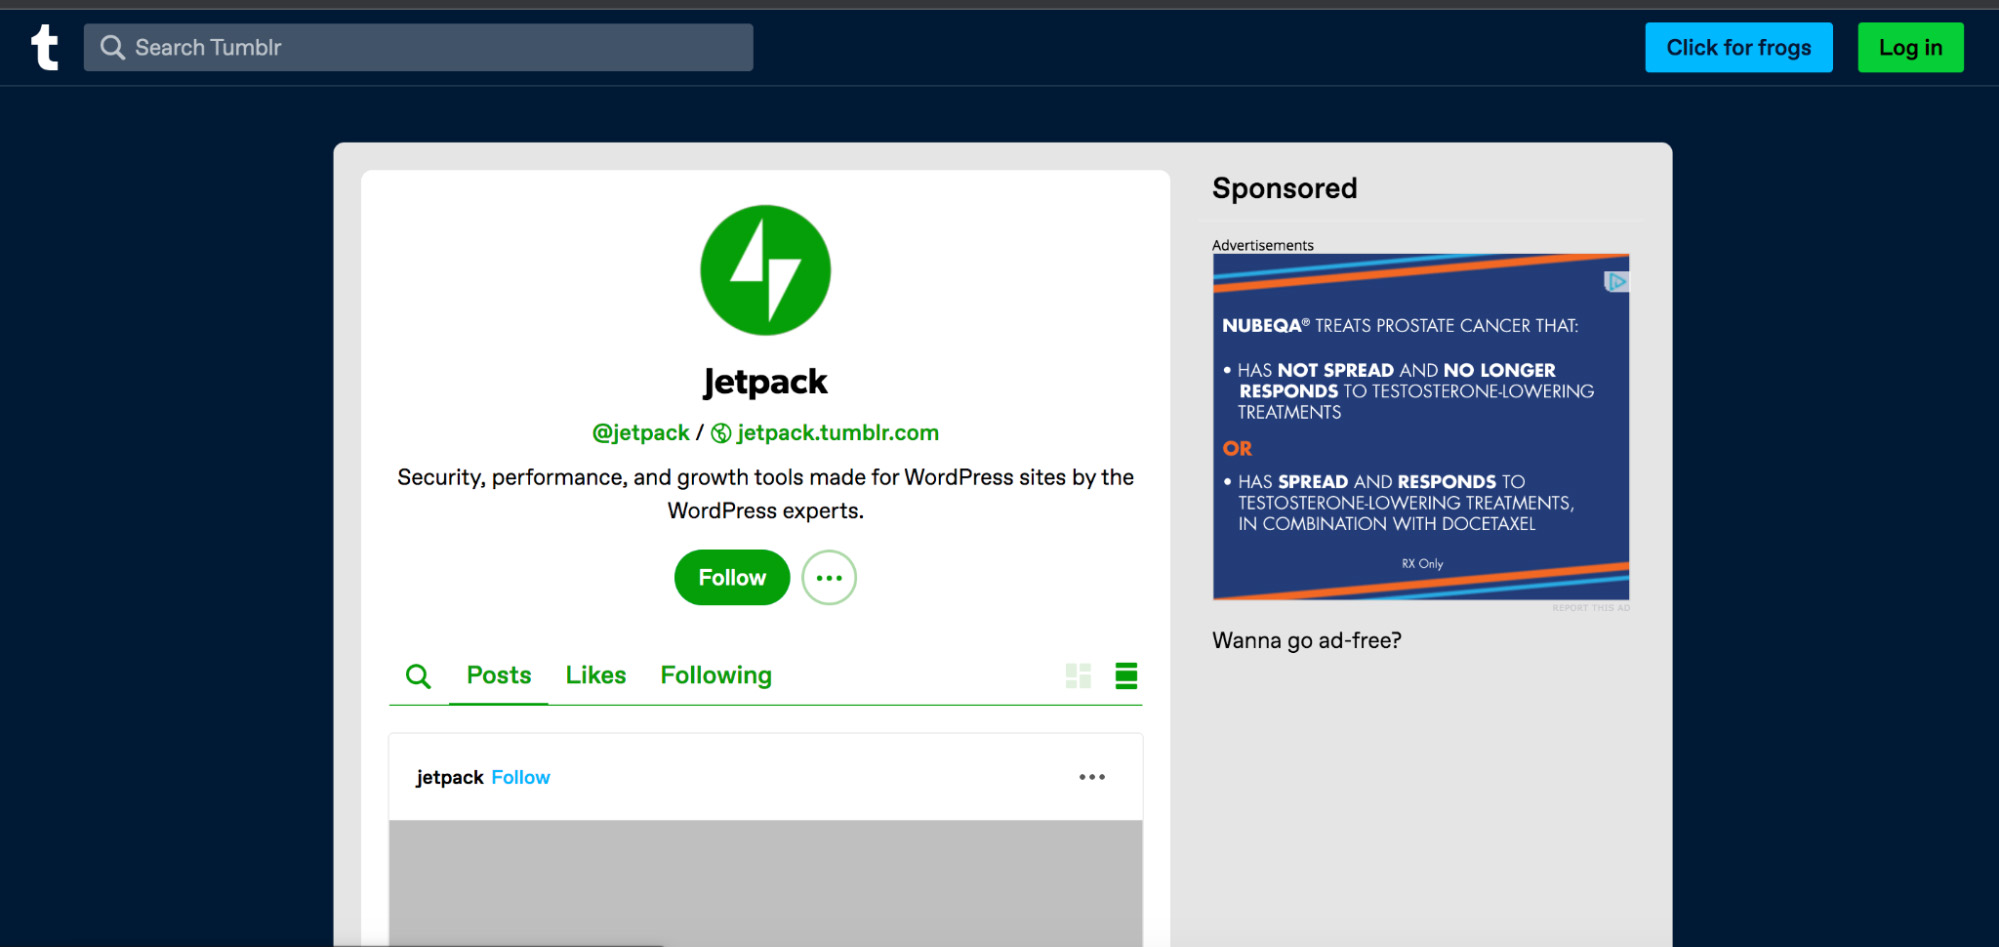 Jetpack on Tumblr - a unique, fan-first platform and user base